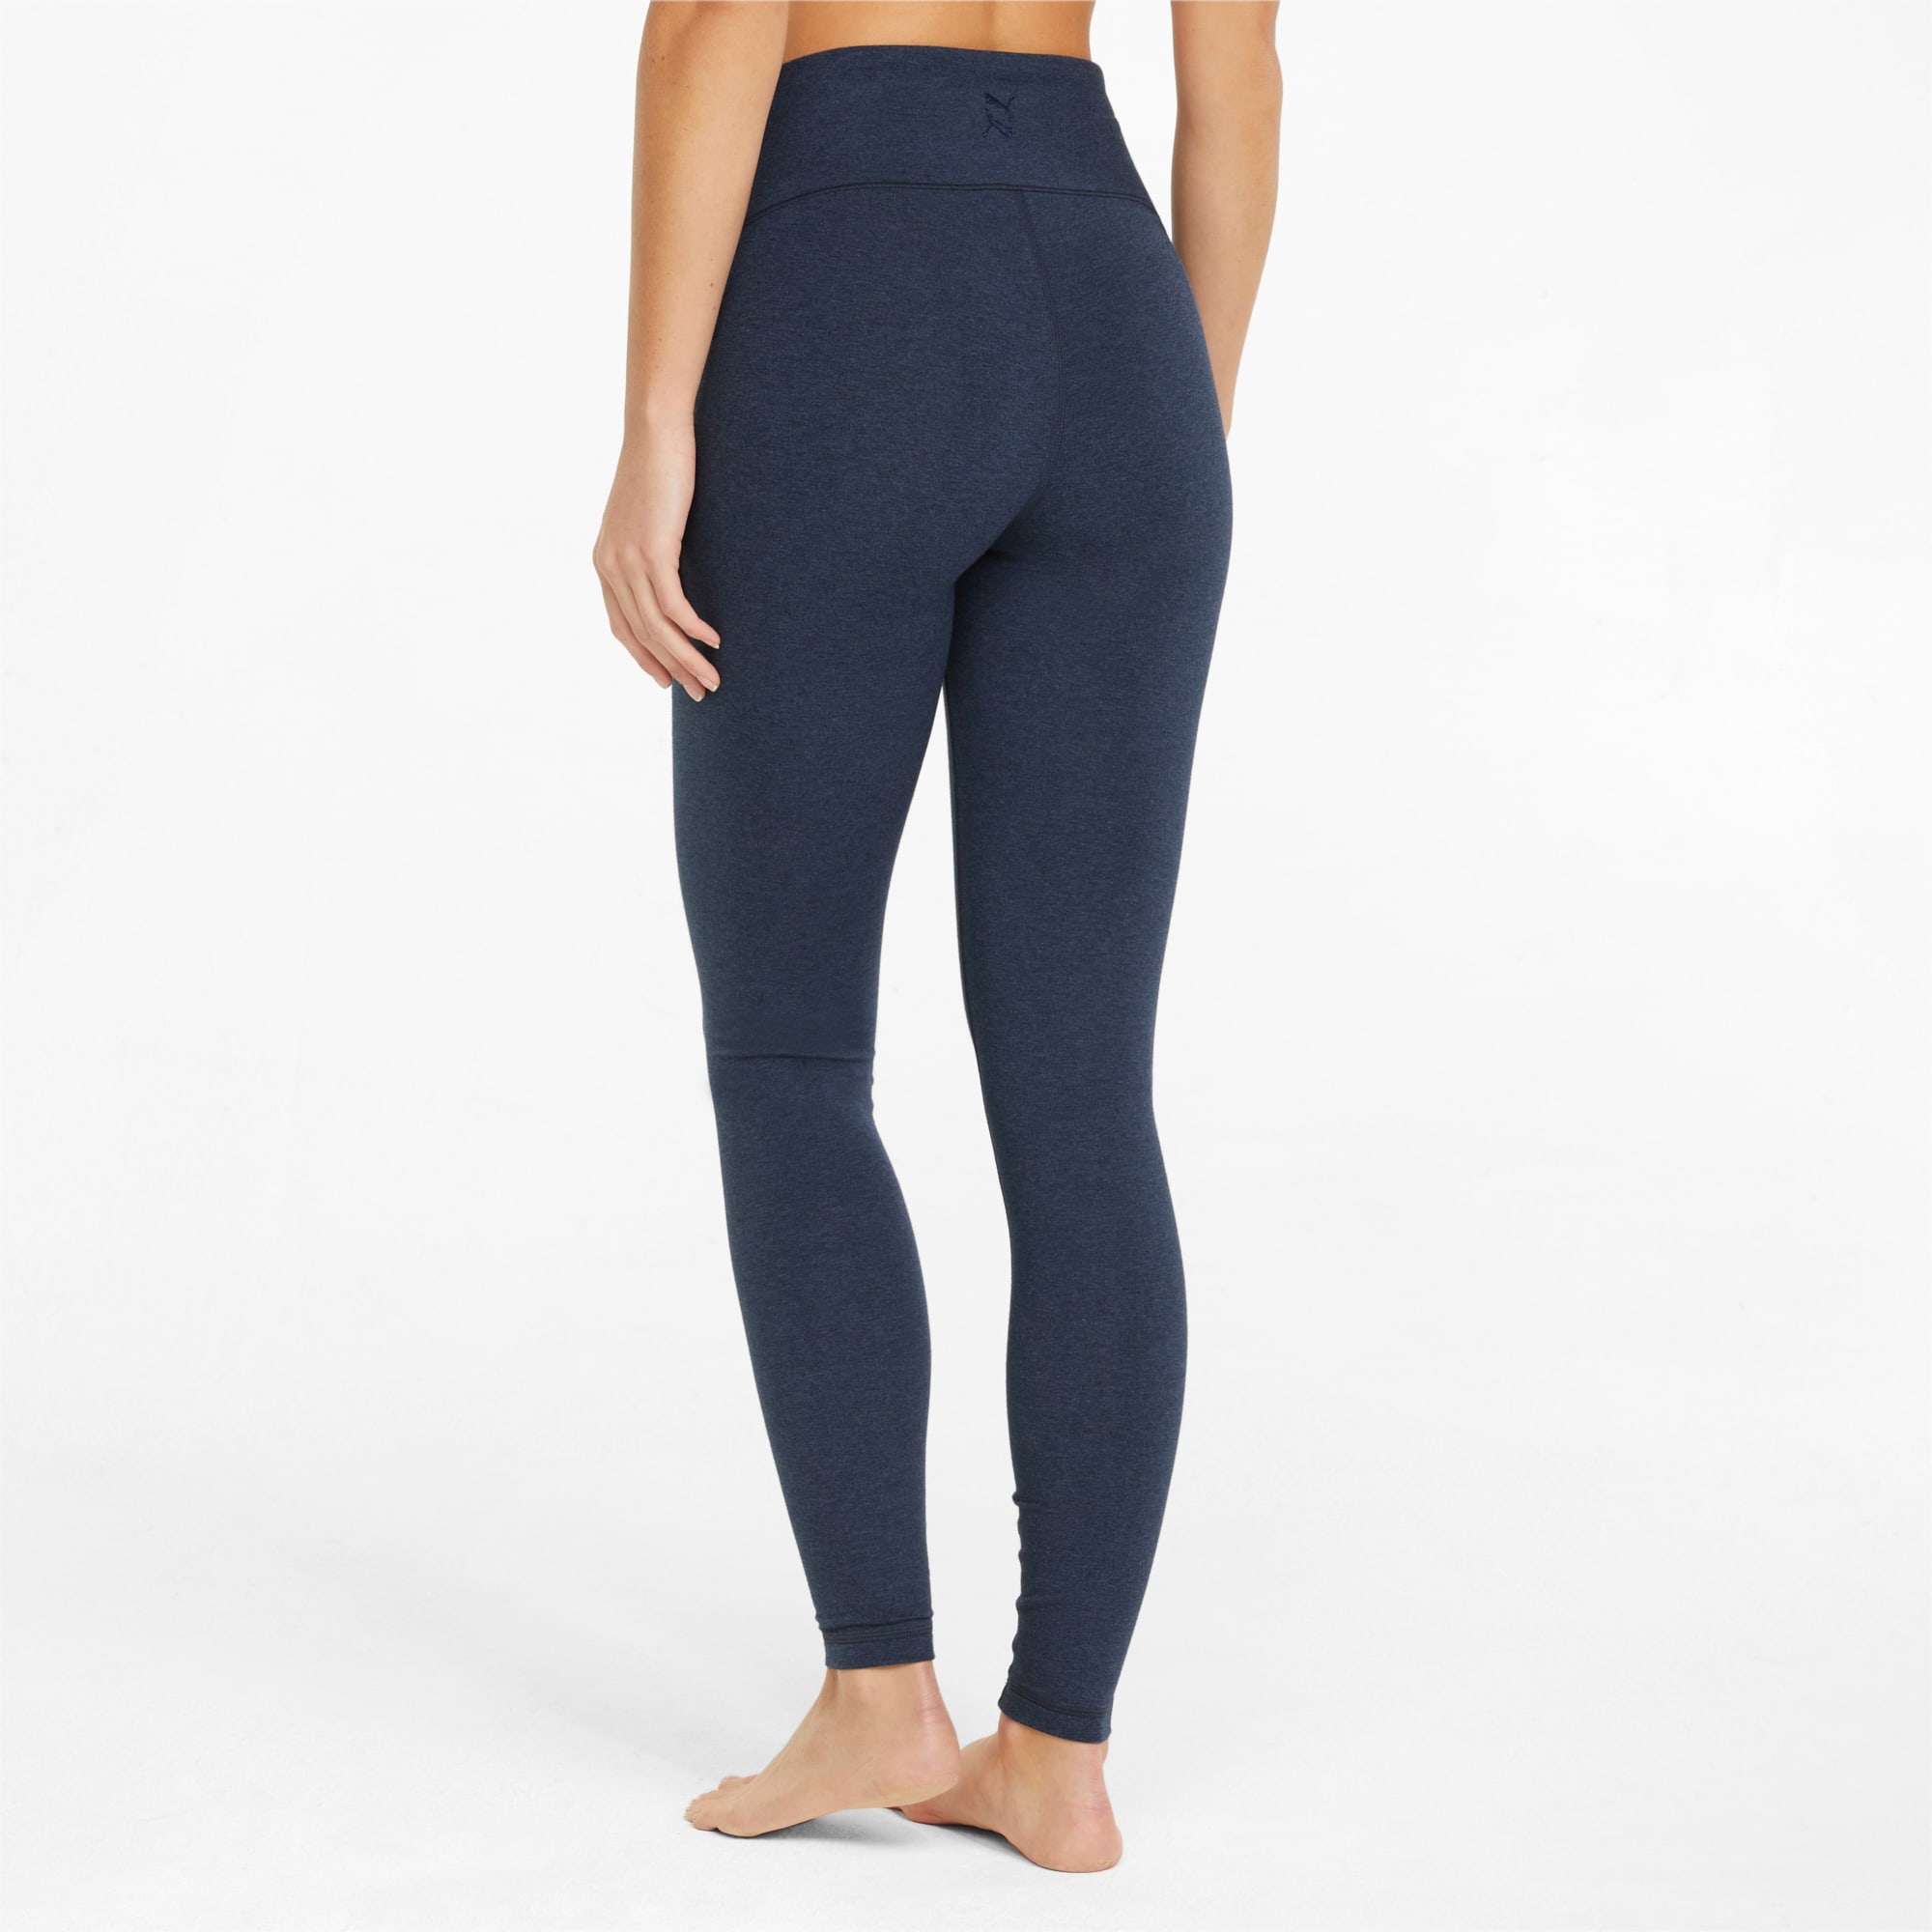 PUMA Womens Blur Tight Capri Leggings Activewear Yoga Athletic Pants NWOT